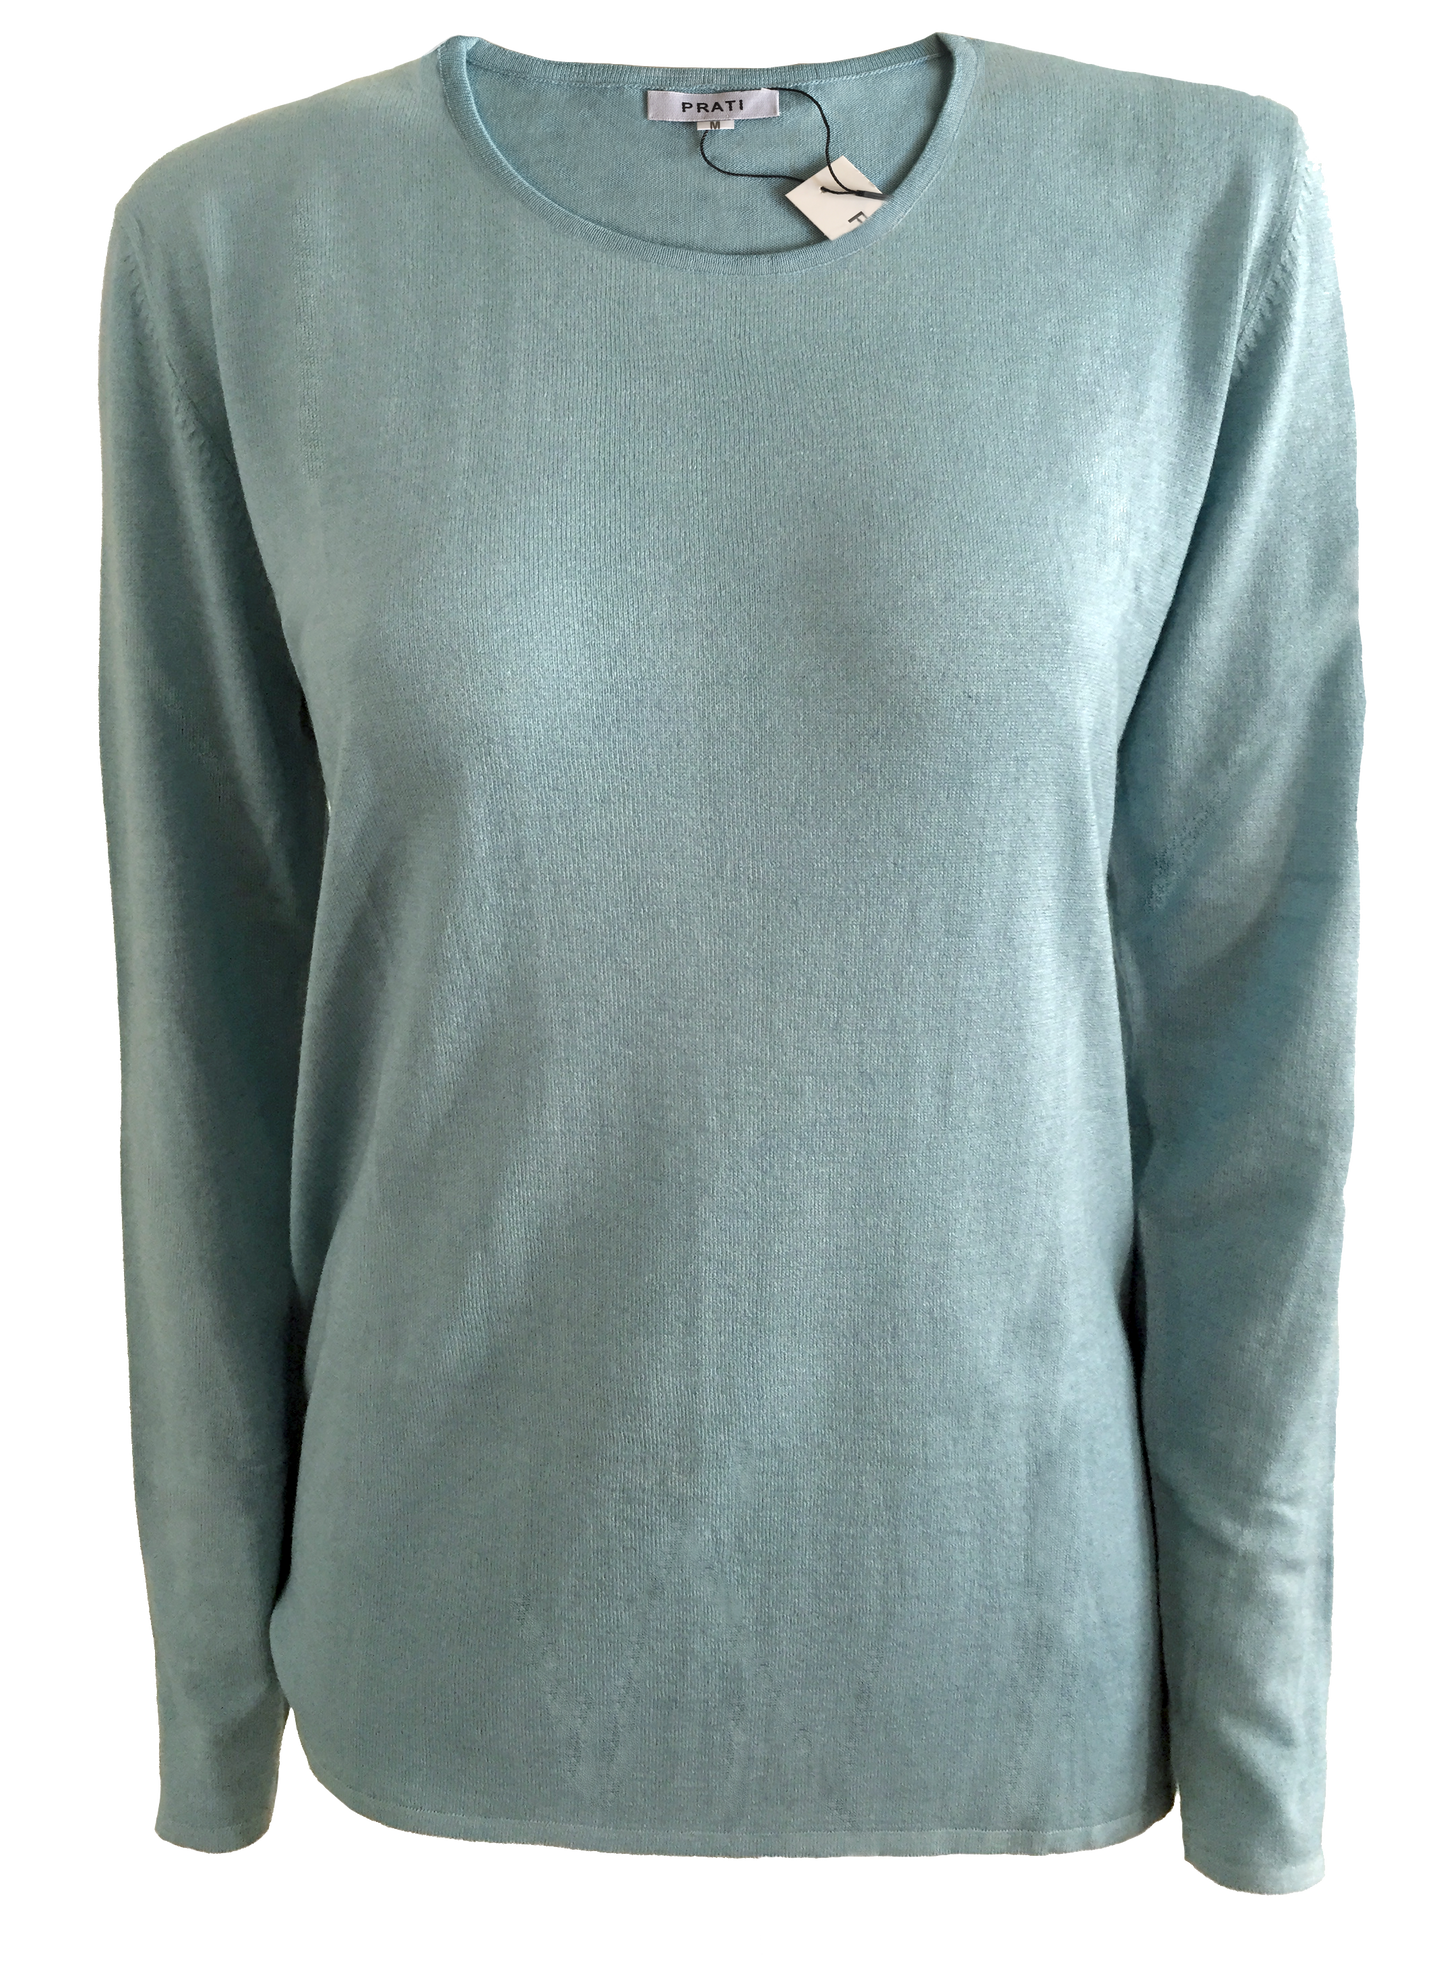 Cashmere Silk crew neck sweater t shirt havana blue